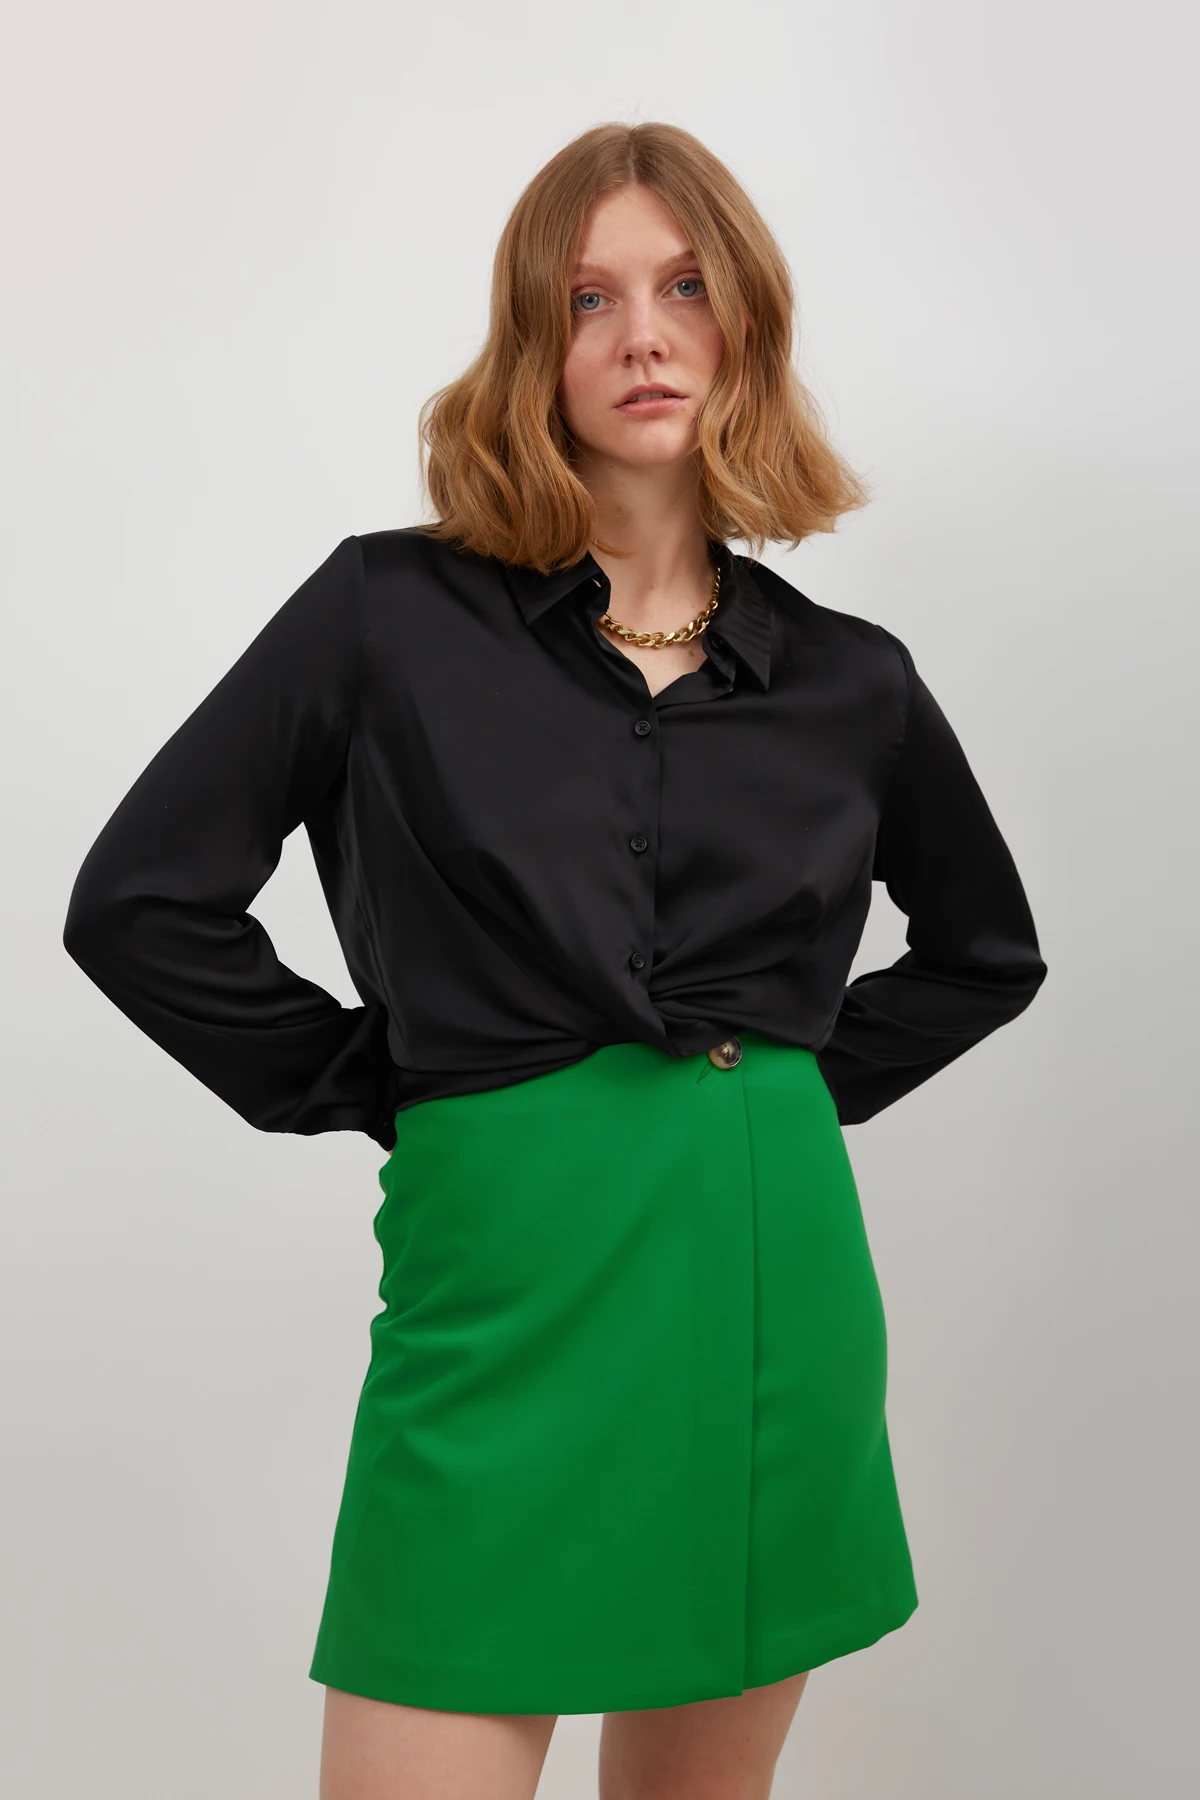 Short skirt in bright green, photo 1